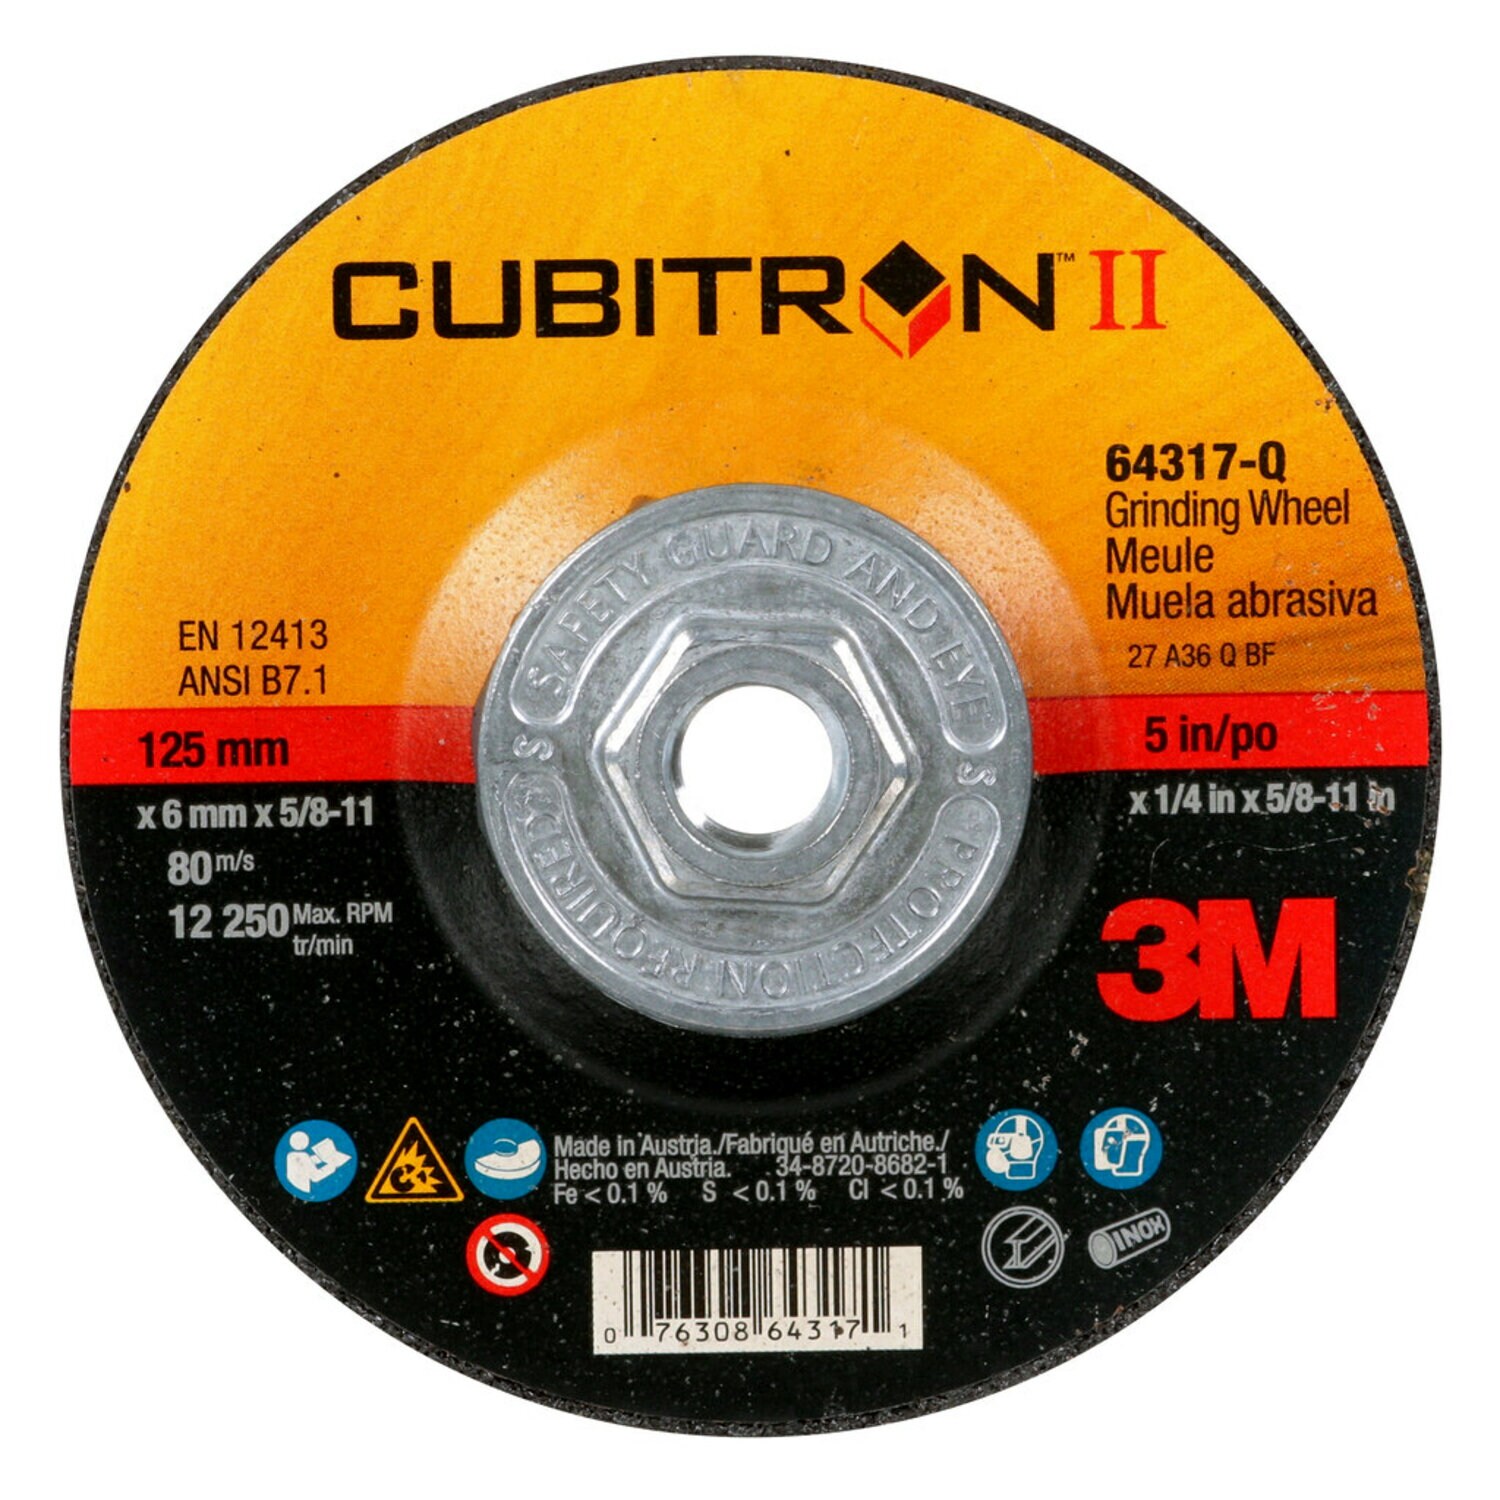 7100244819 - 3M Cubitron II Depressed Center Grinding Wheel, 64317, Quick Change,
Type 27, 5 in x 1/4 in x 5/8"-11, 10/Carton, 20 ea/Case